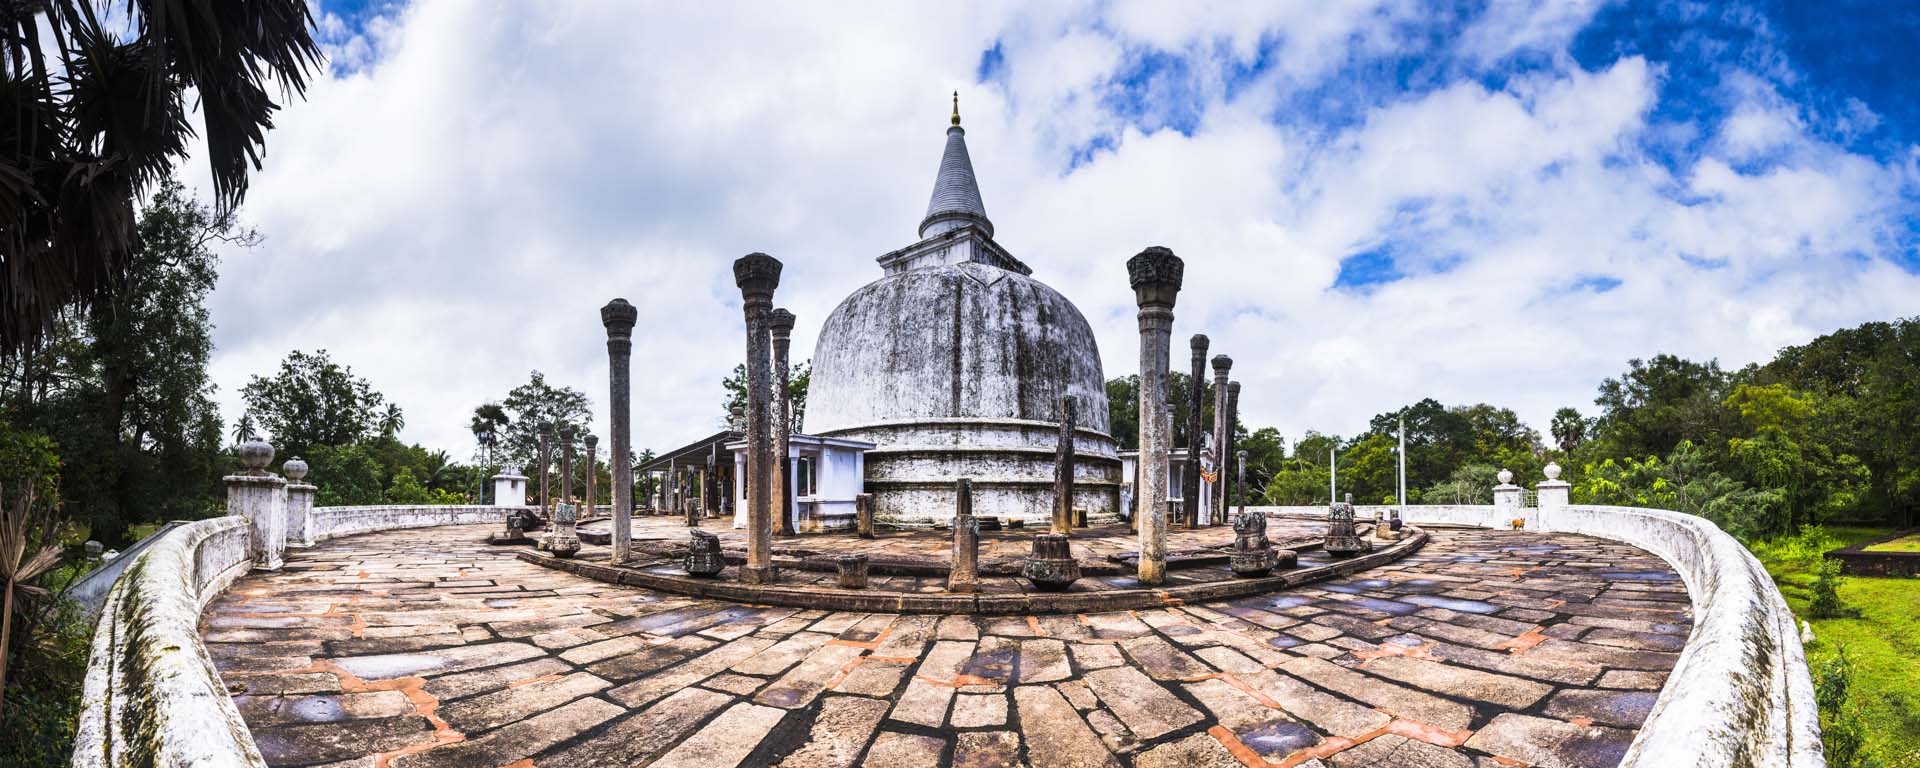 Sri lanka-Anuradhapura-Temple